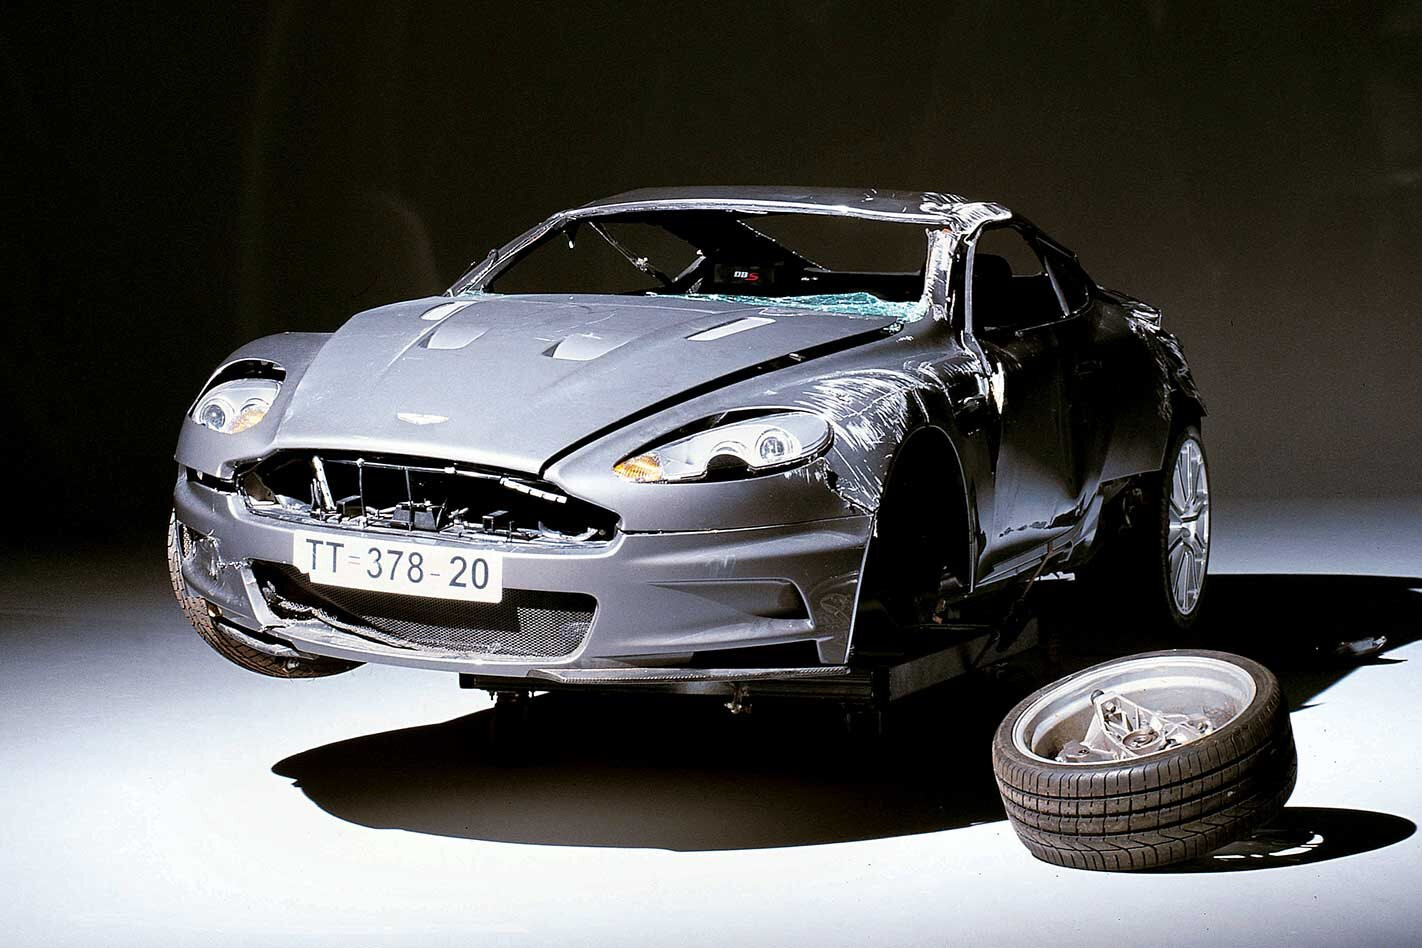 The Aston Martin Dbs Behind The James Bond Casino Royale Stunt